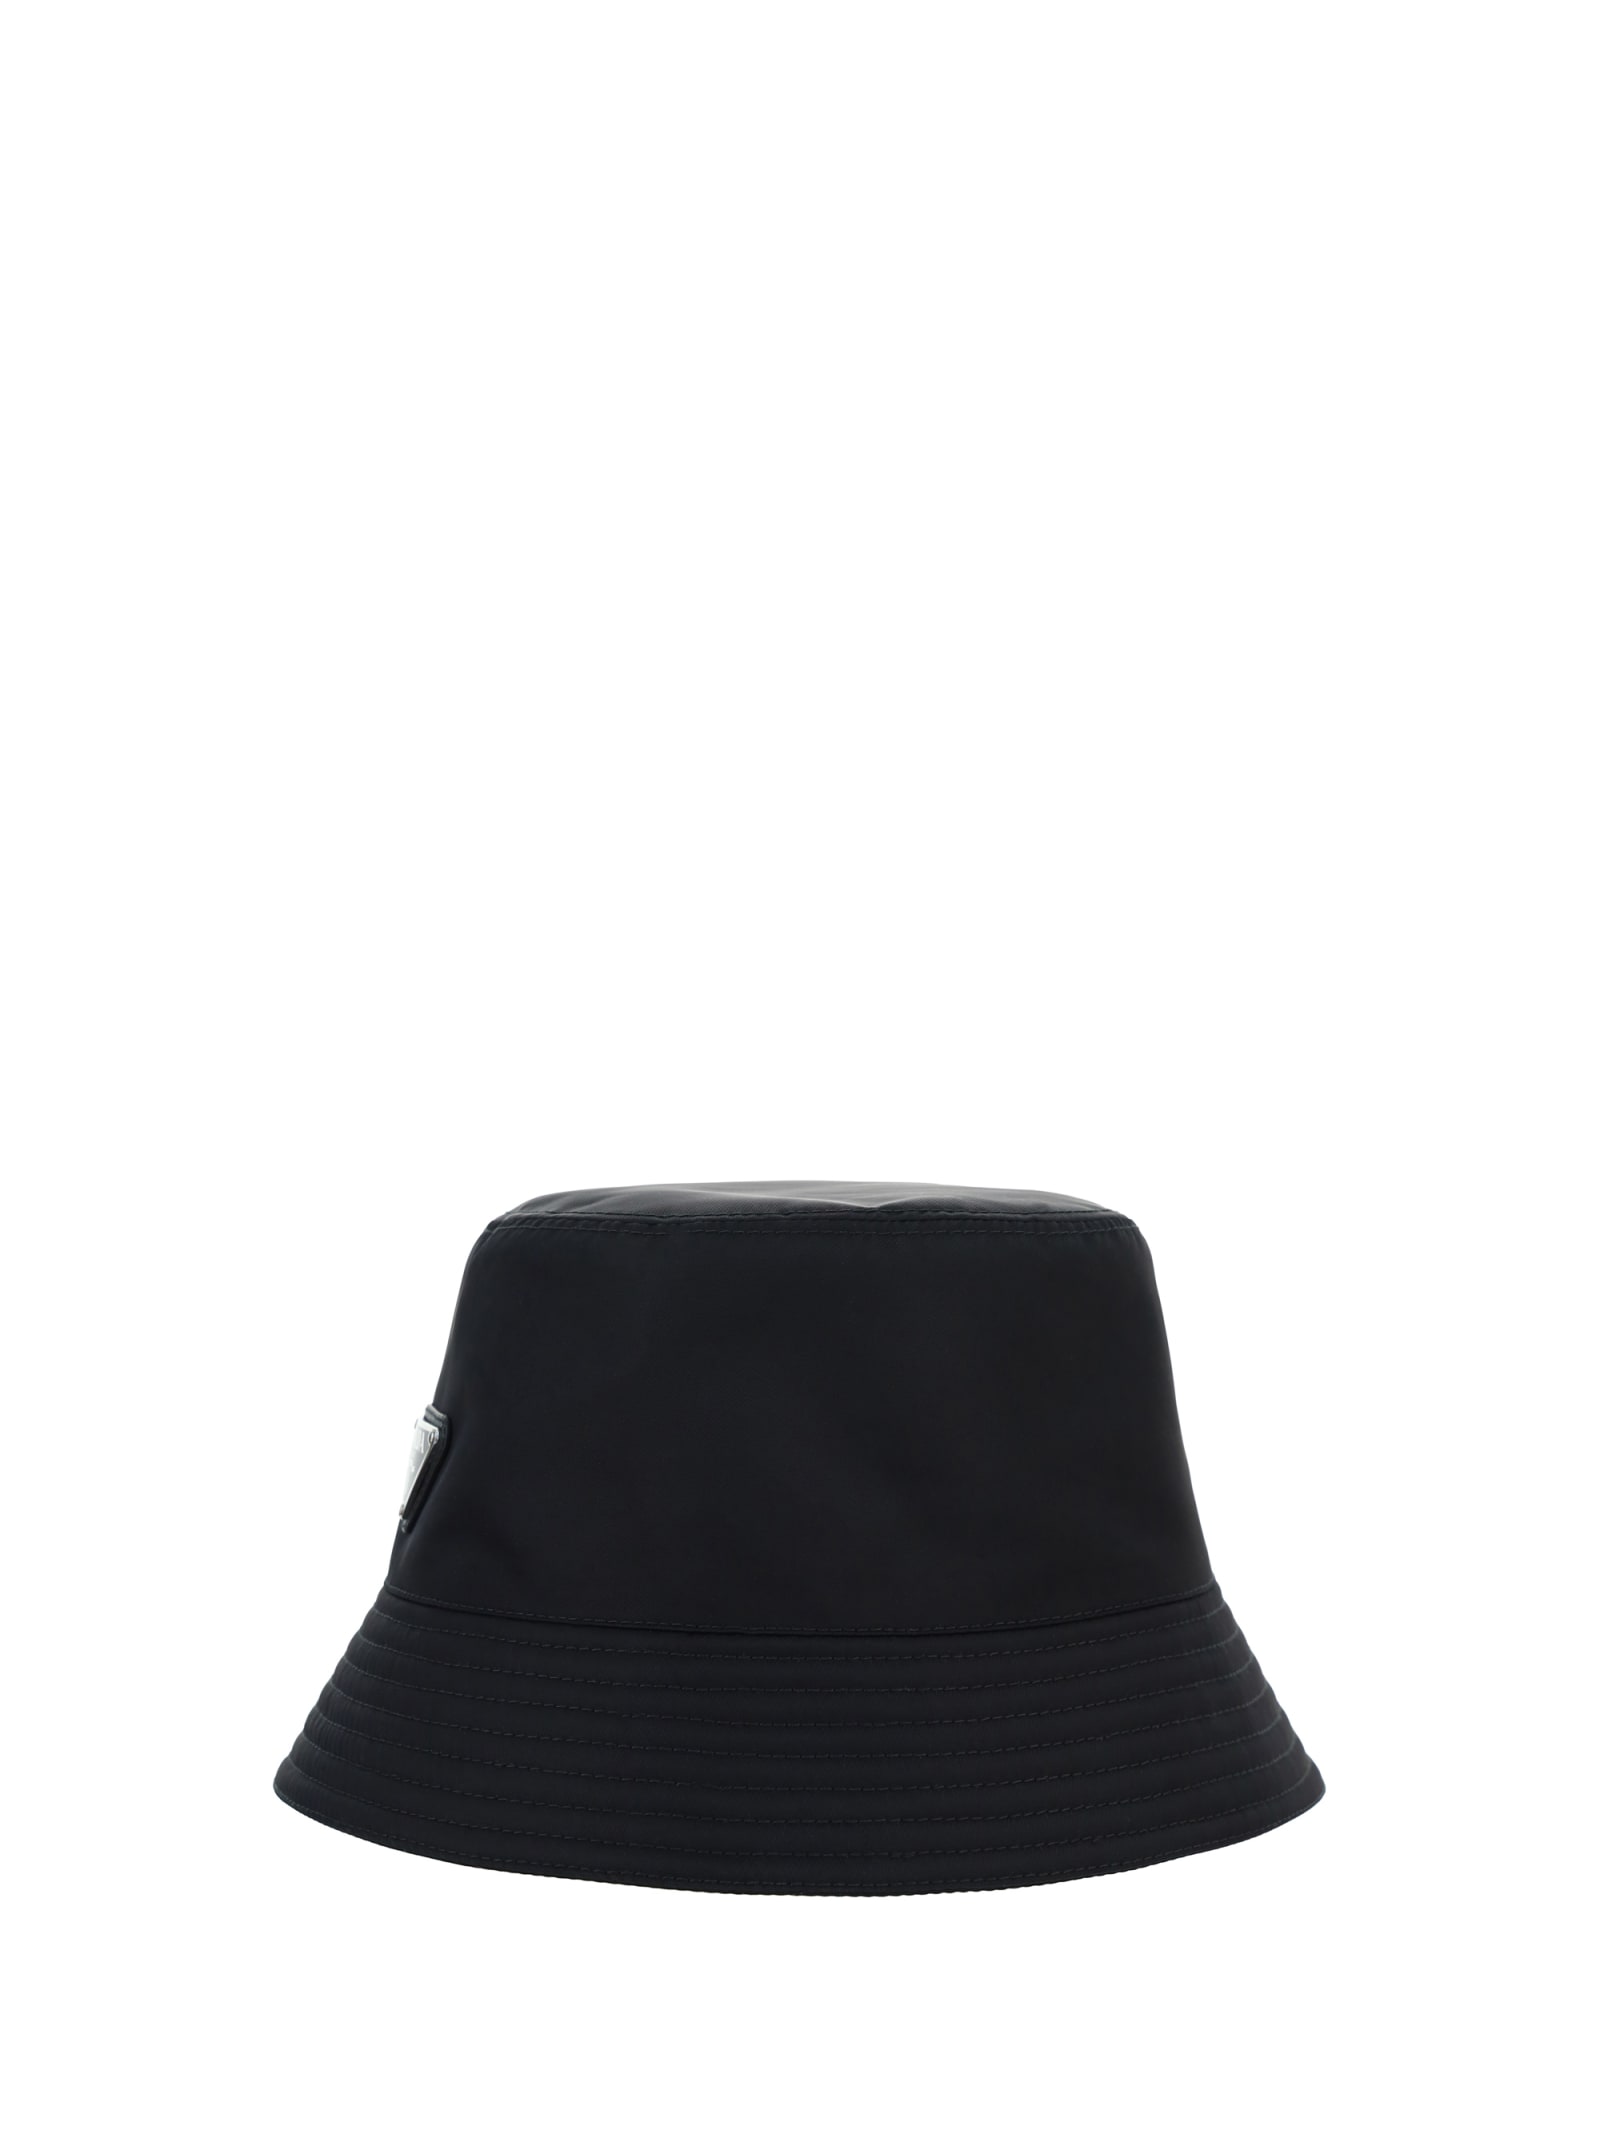 Prada Bucket Hat In Black